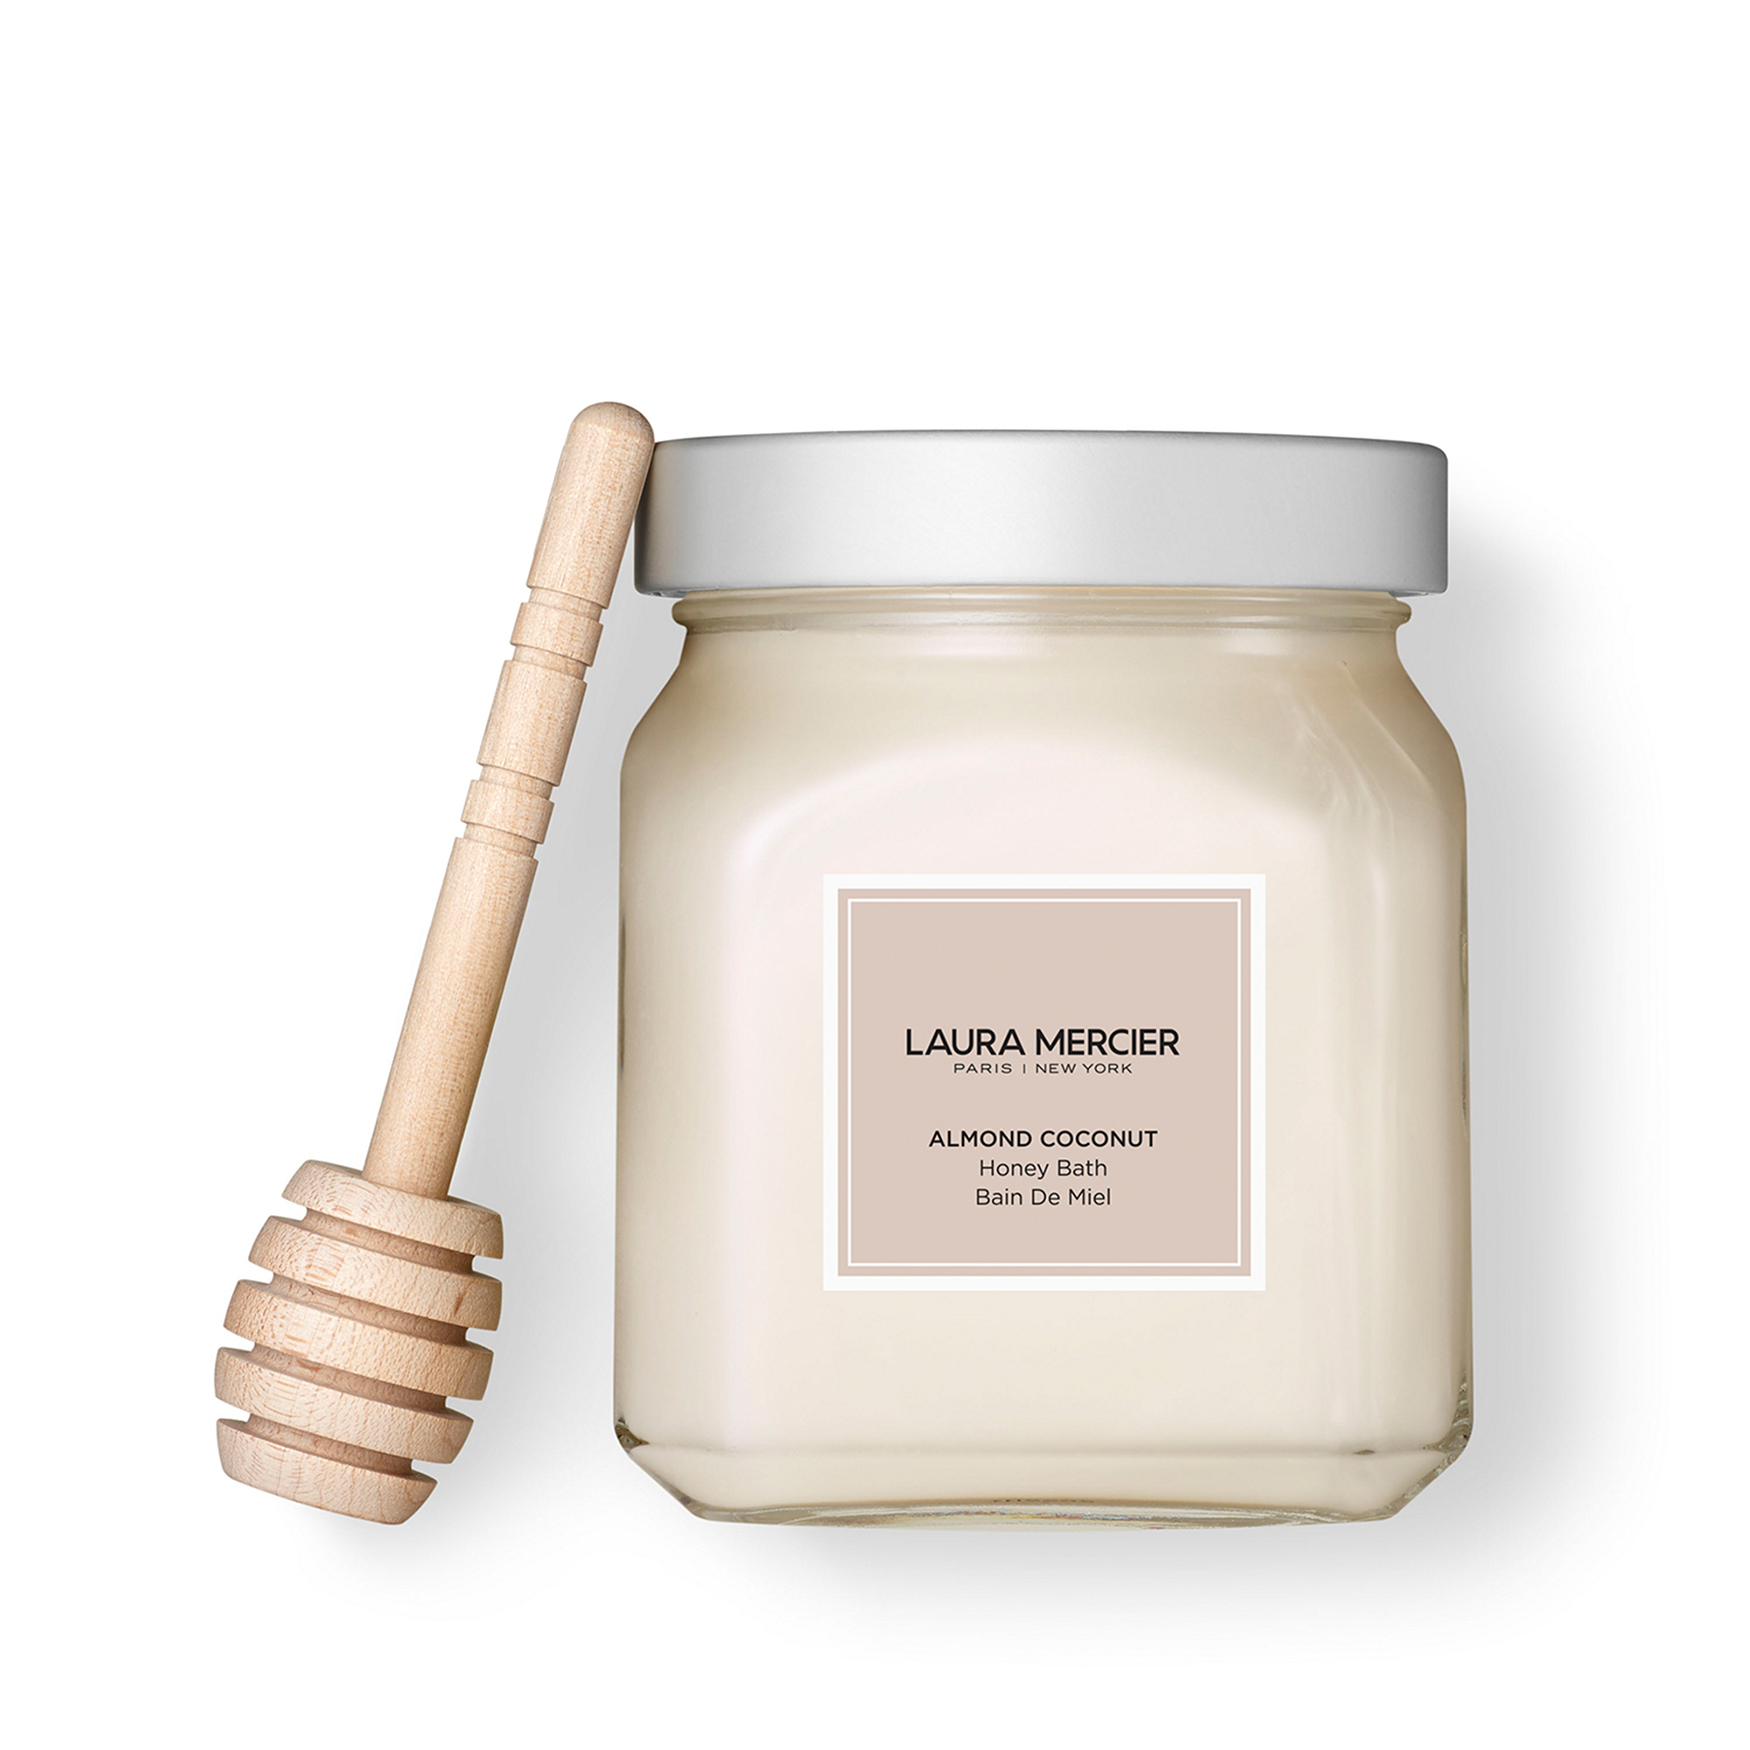 Laura Mercier Almond Coconut Milk Honey Bath - Space.NK - GBP